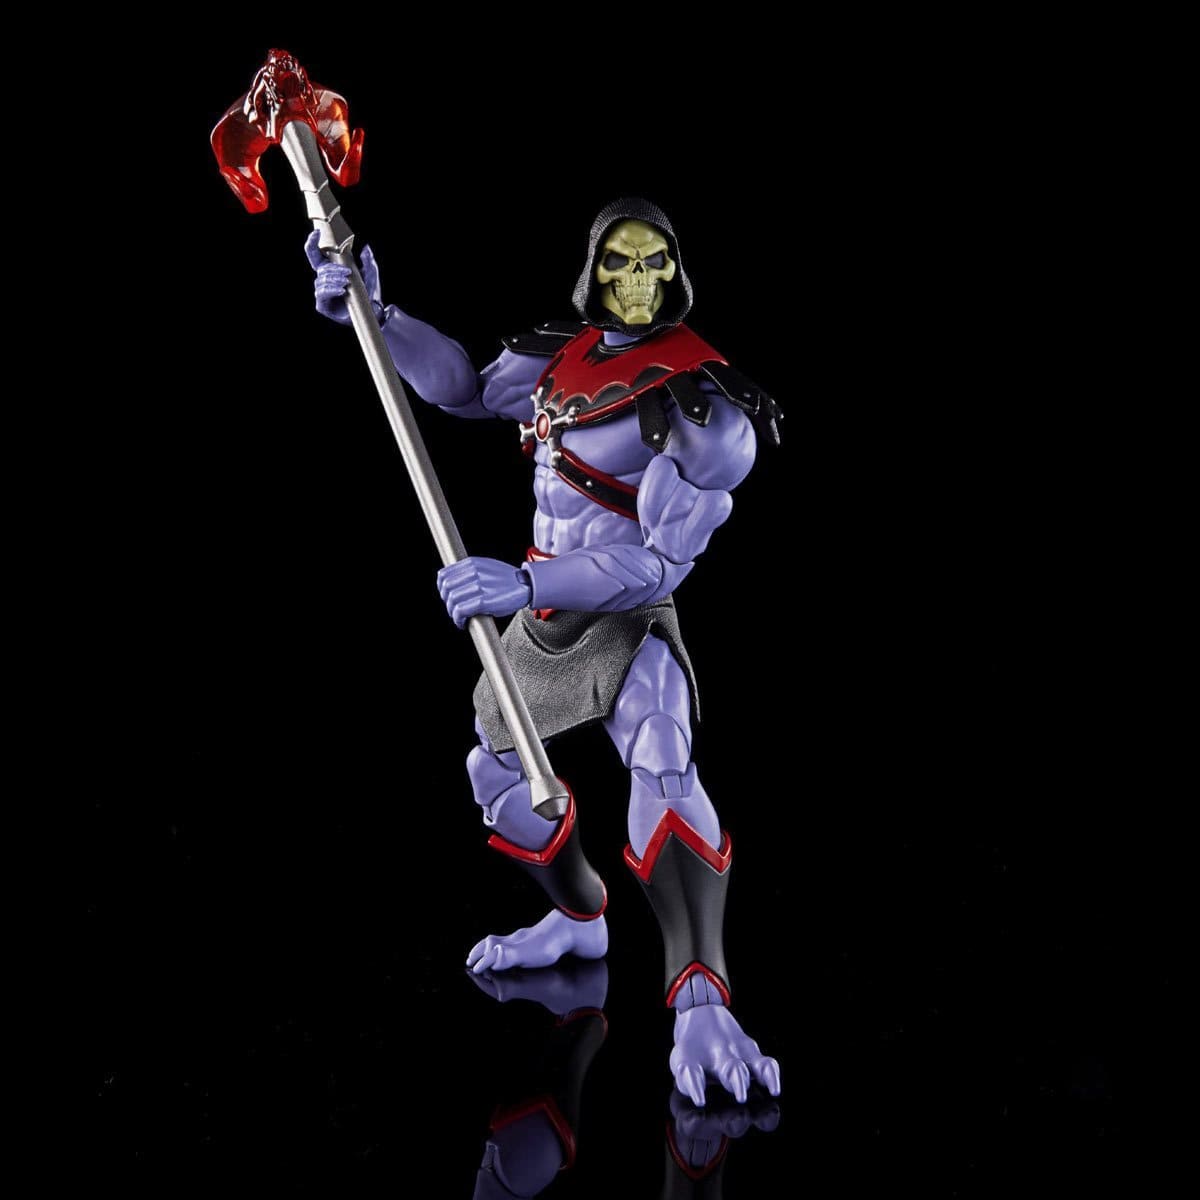 Horde Skeletor Masters of the Universe Masterverse Action Figure - Pop-O-Loco - Mattel